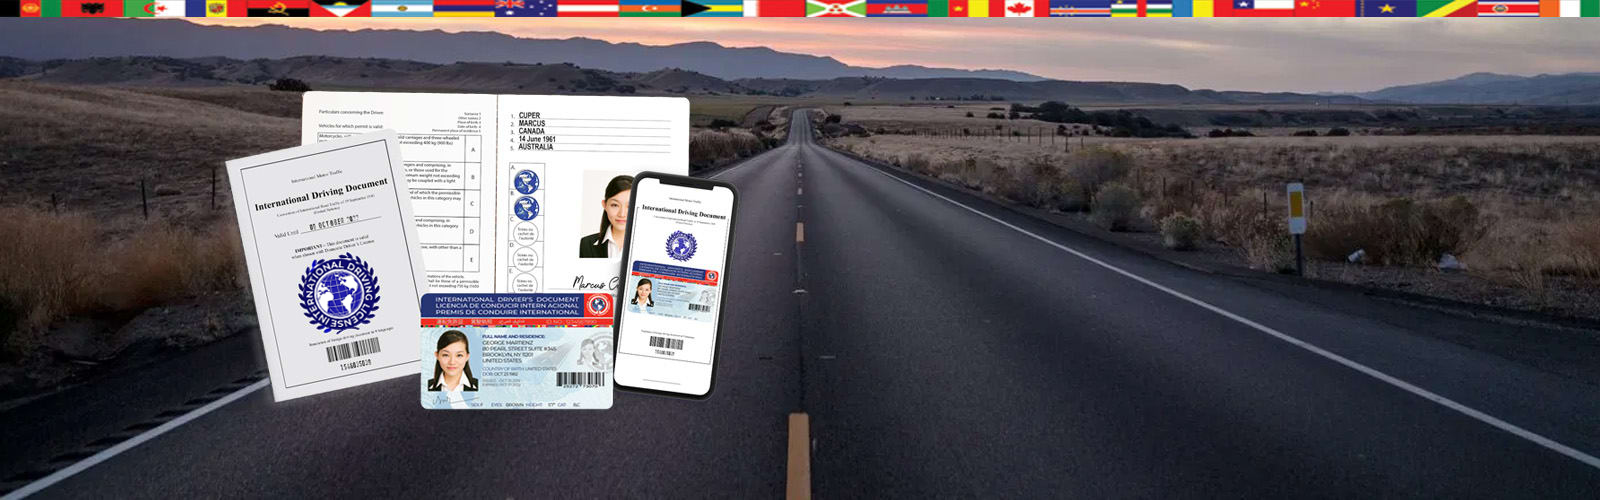 Virtual International Driver's License